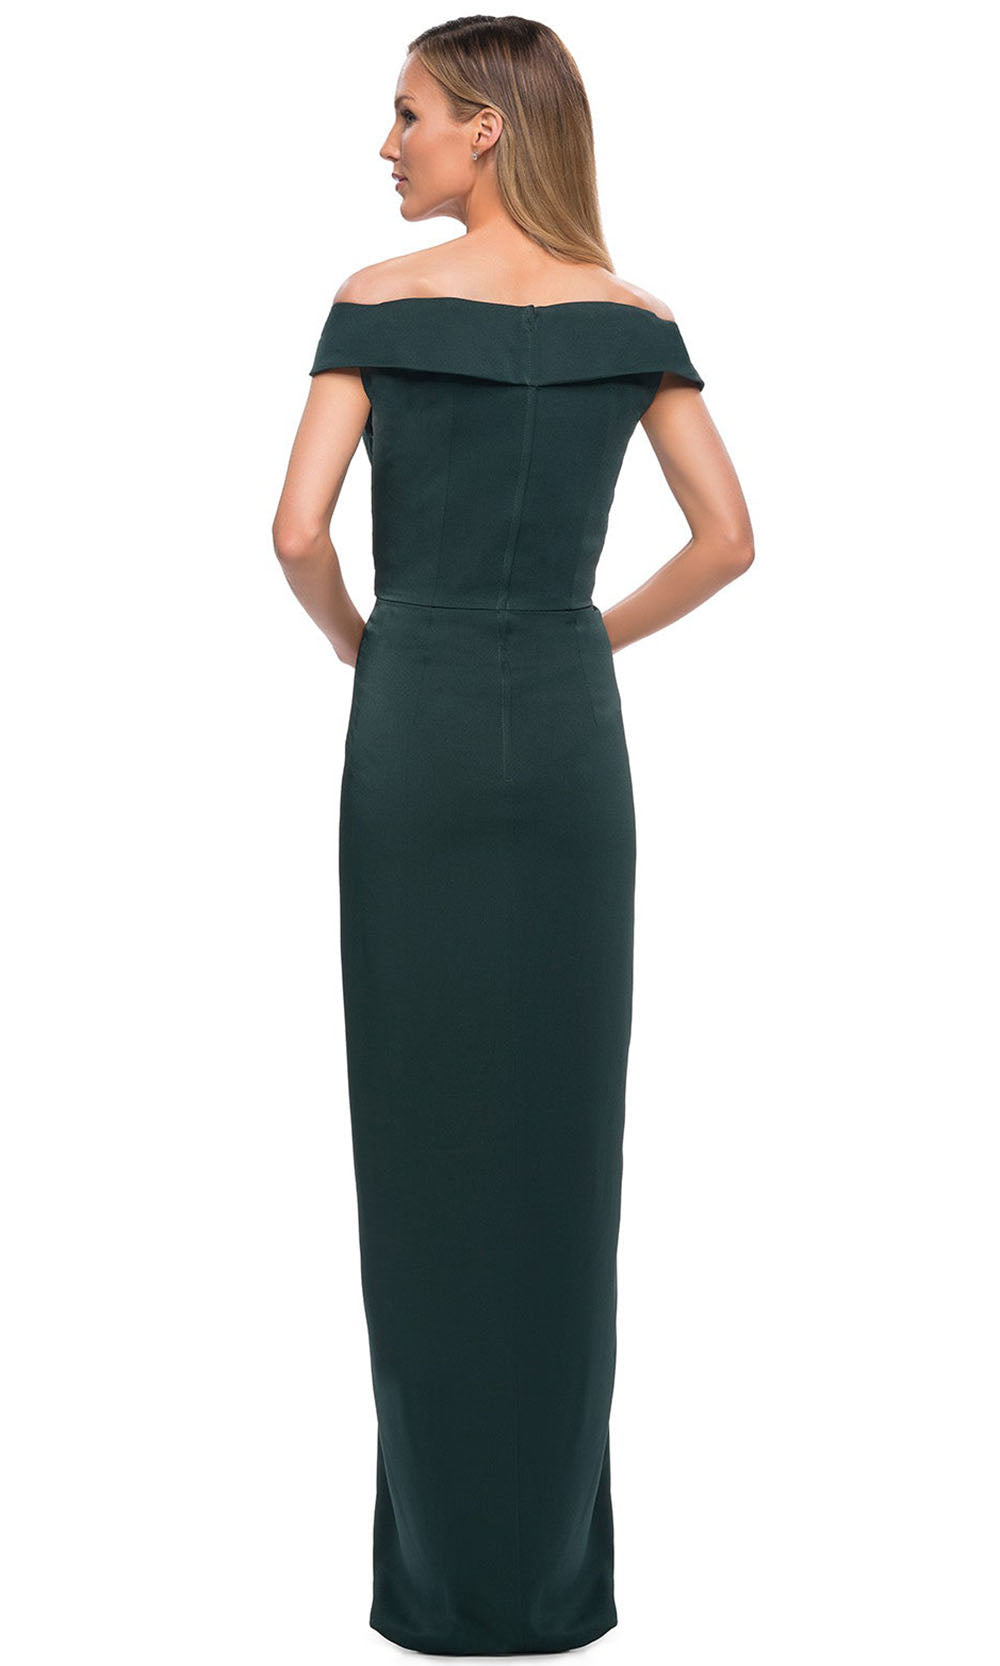 La Femme - 25206 Cap Sleeved Ruched Jersey Long Dress In Green